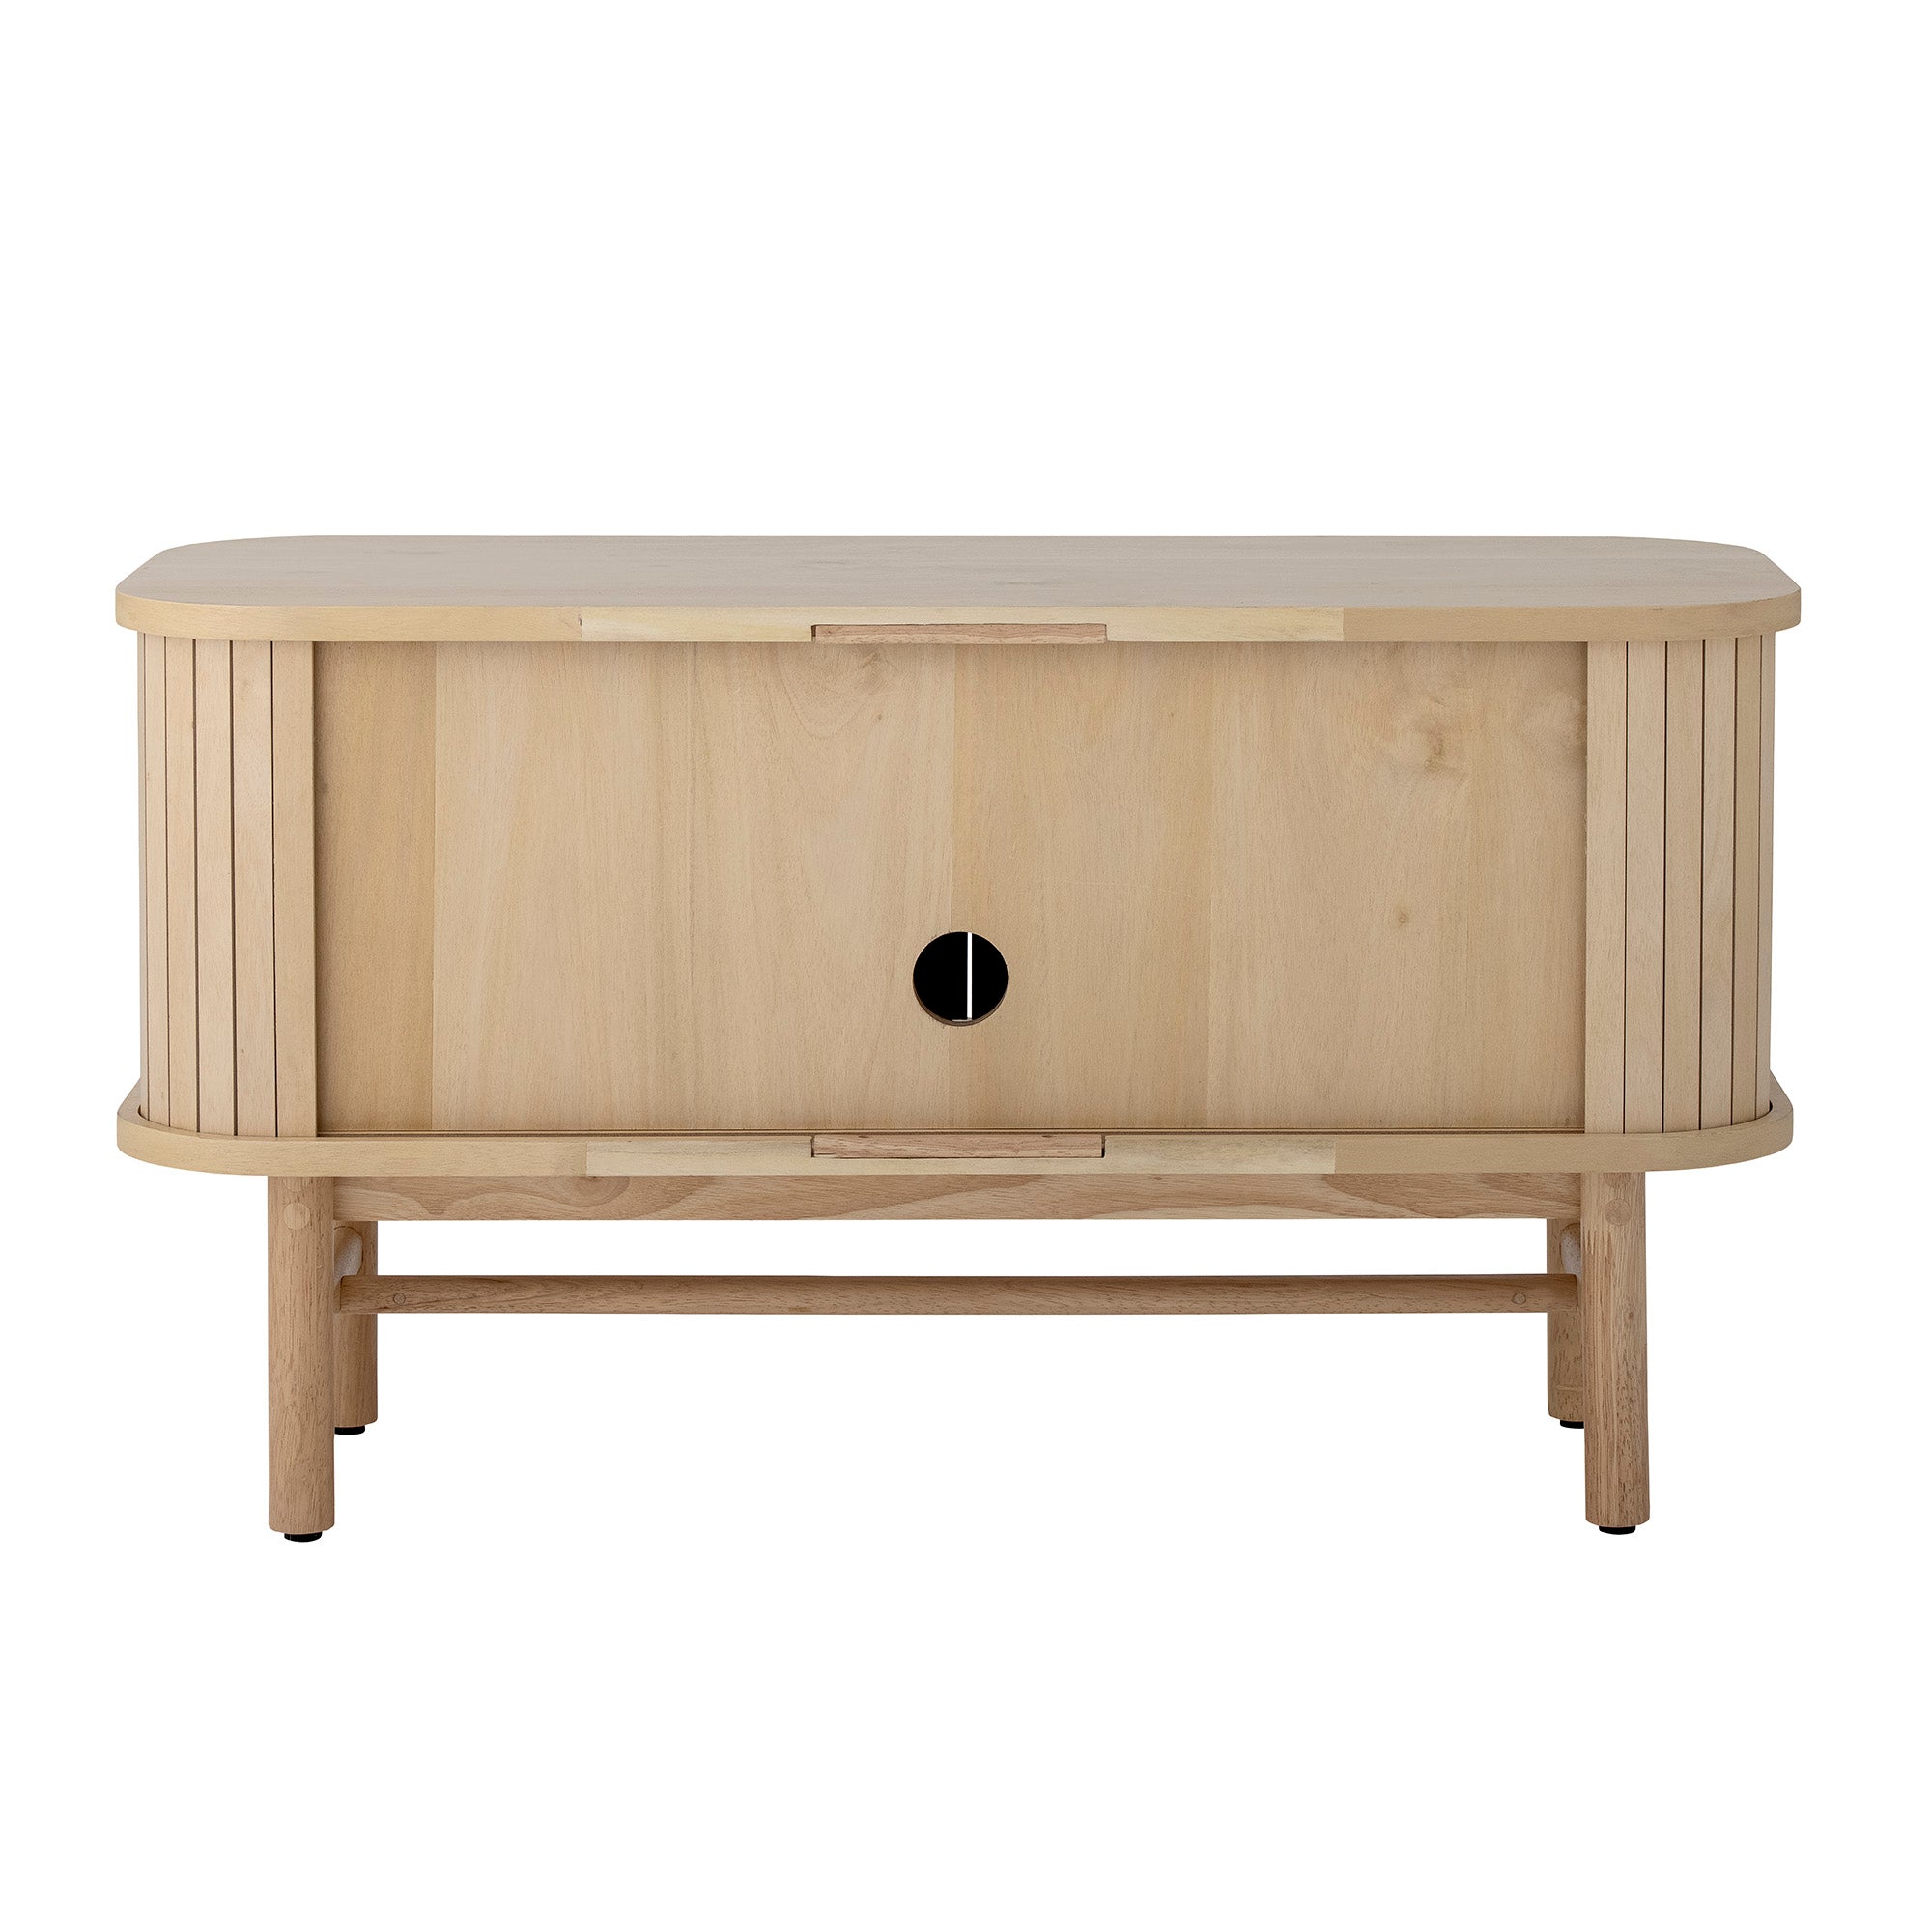 Rubberwood cabinet/ TV stand 90x50x35